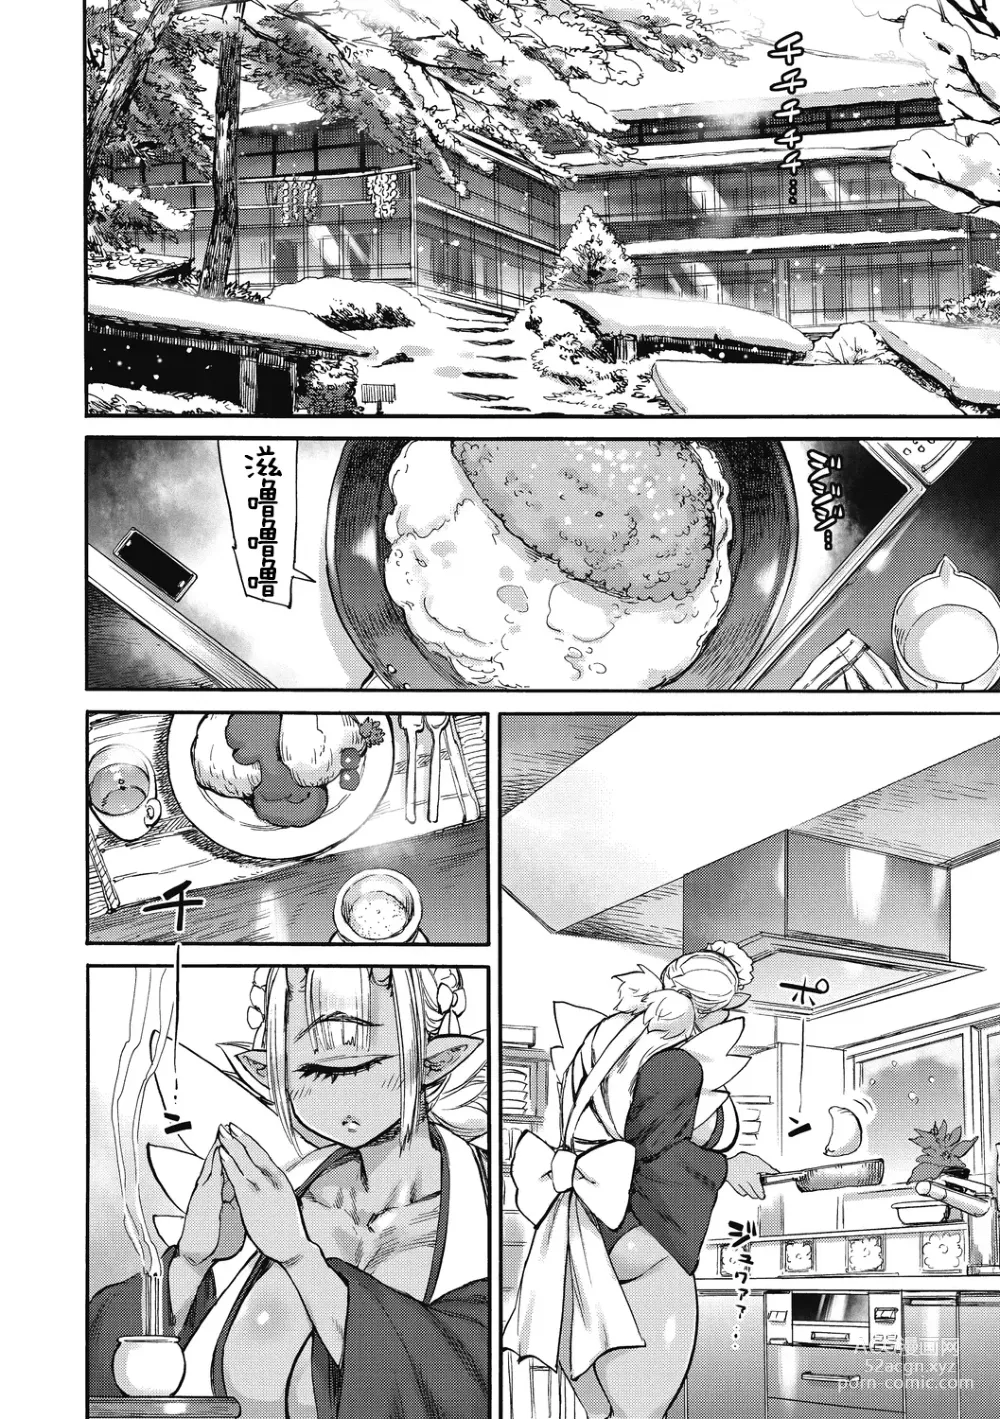 Page 4 of manga Ayame no Noroi